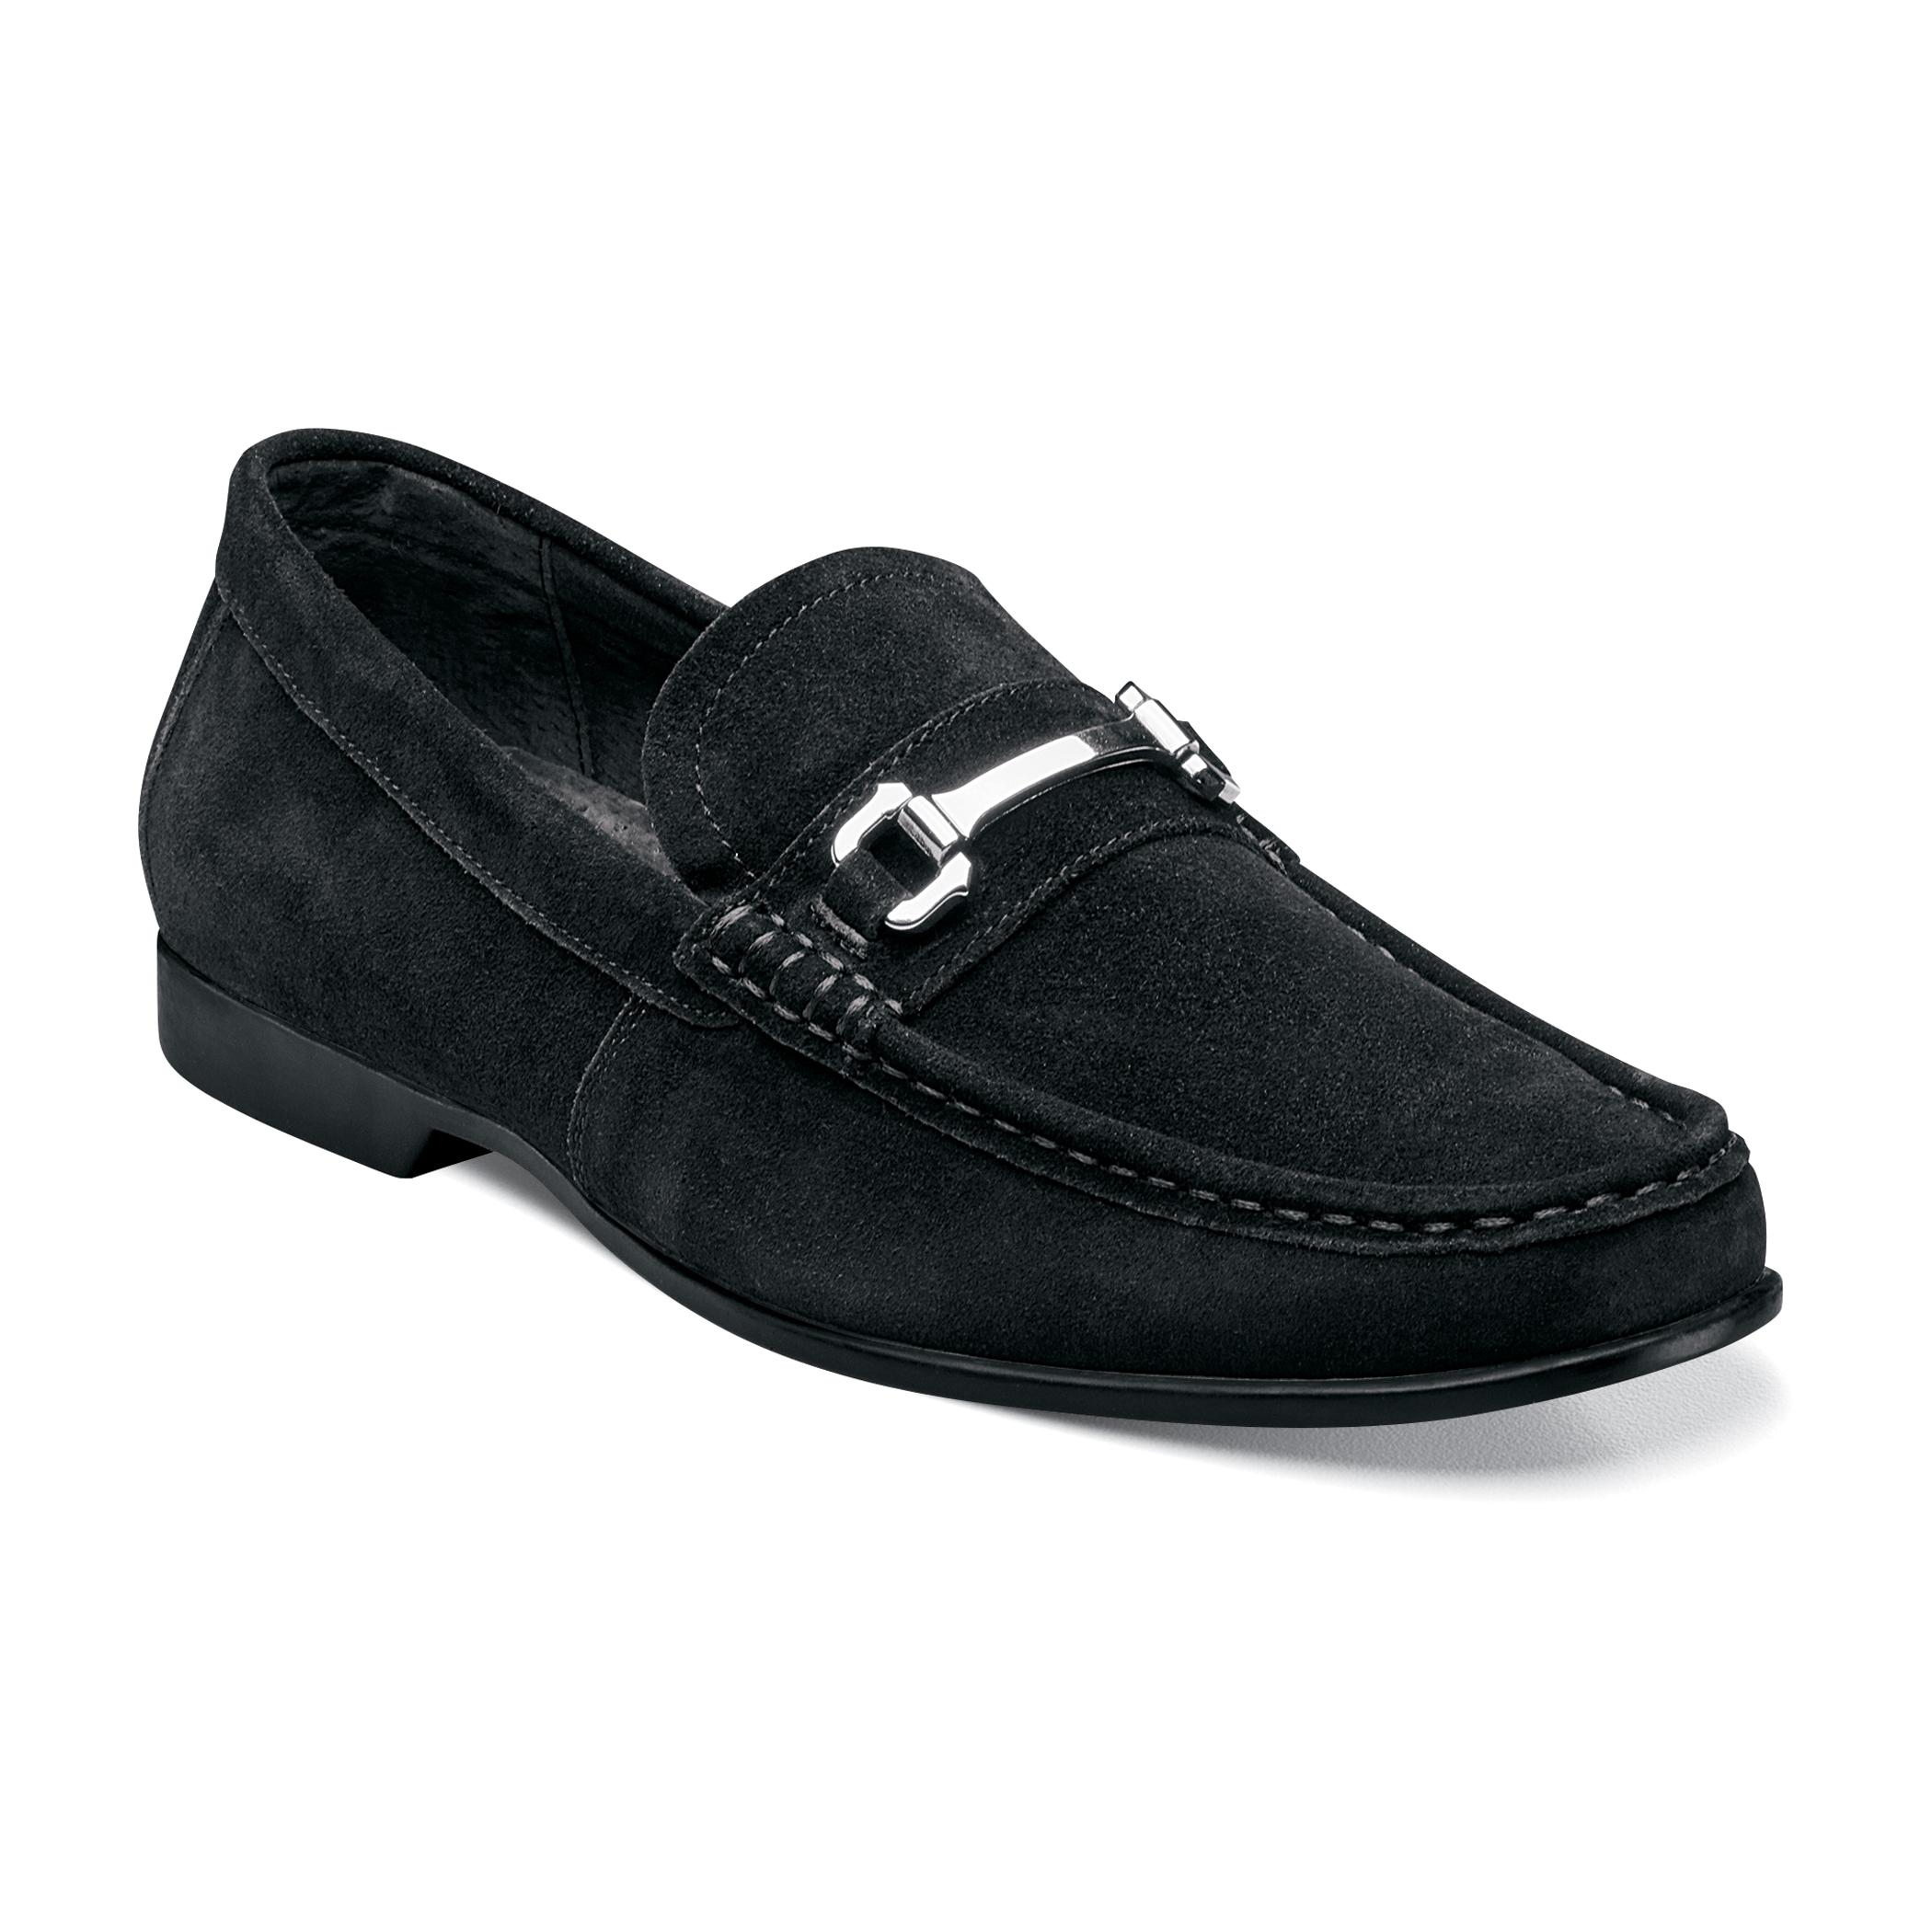 Stacy Adams Ellston Black Suede Moc Toe Loafer Shoes 24951 - $84.90 ...